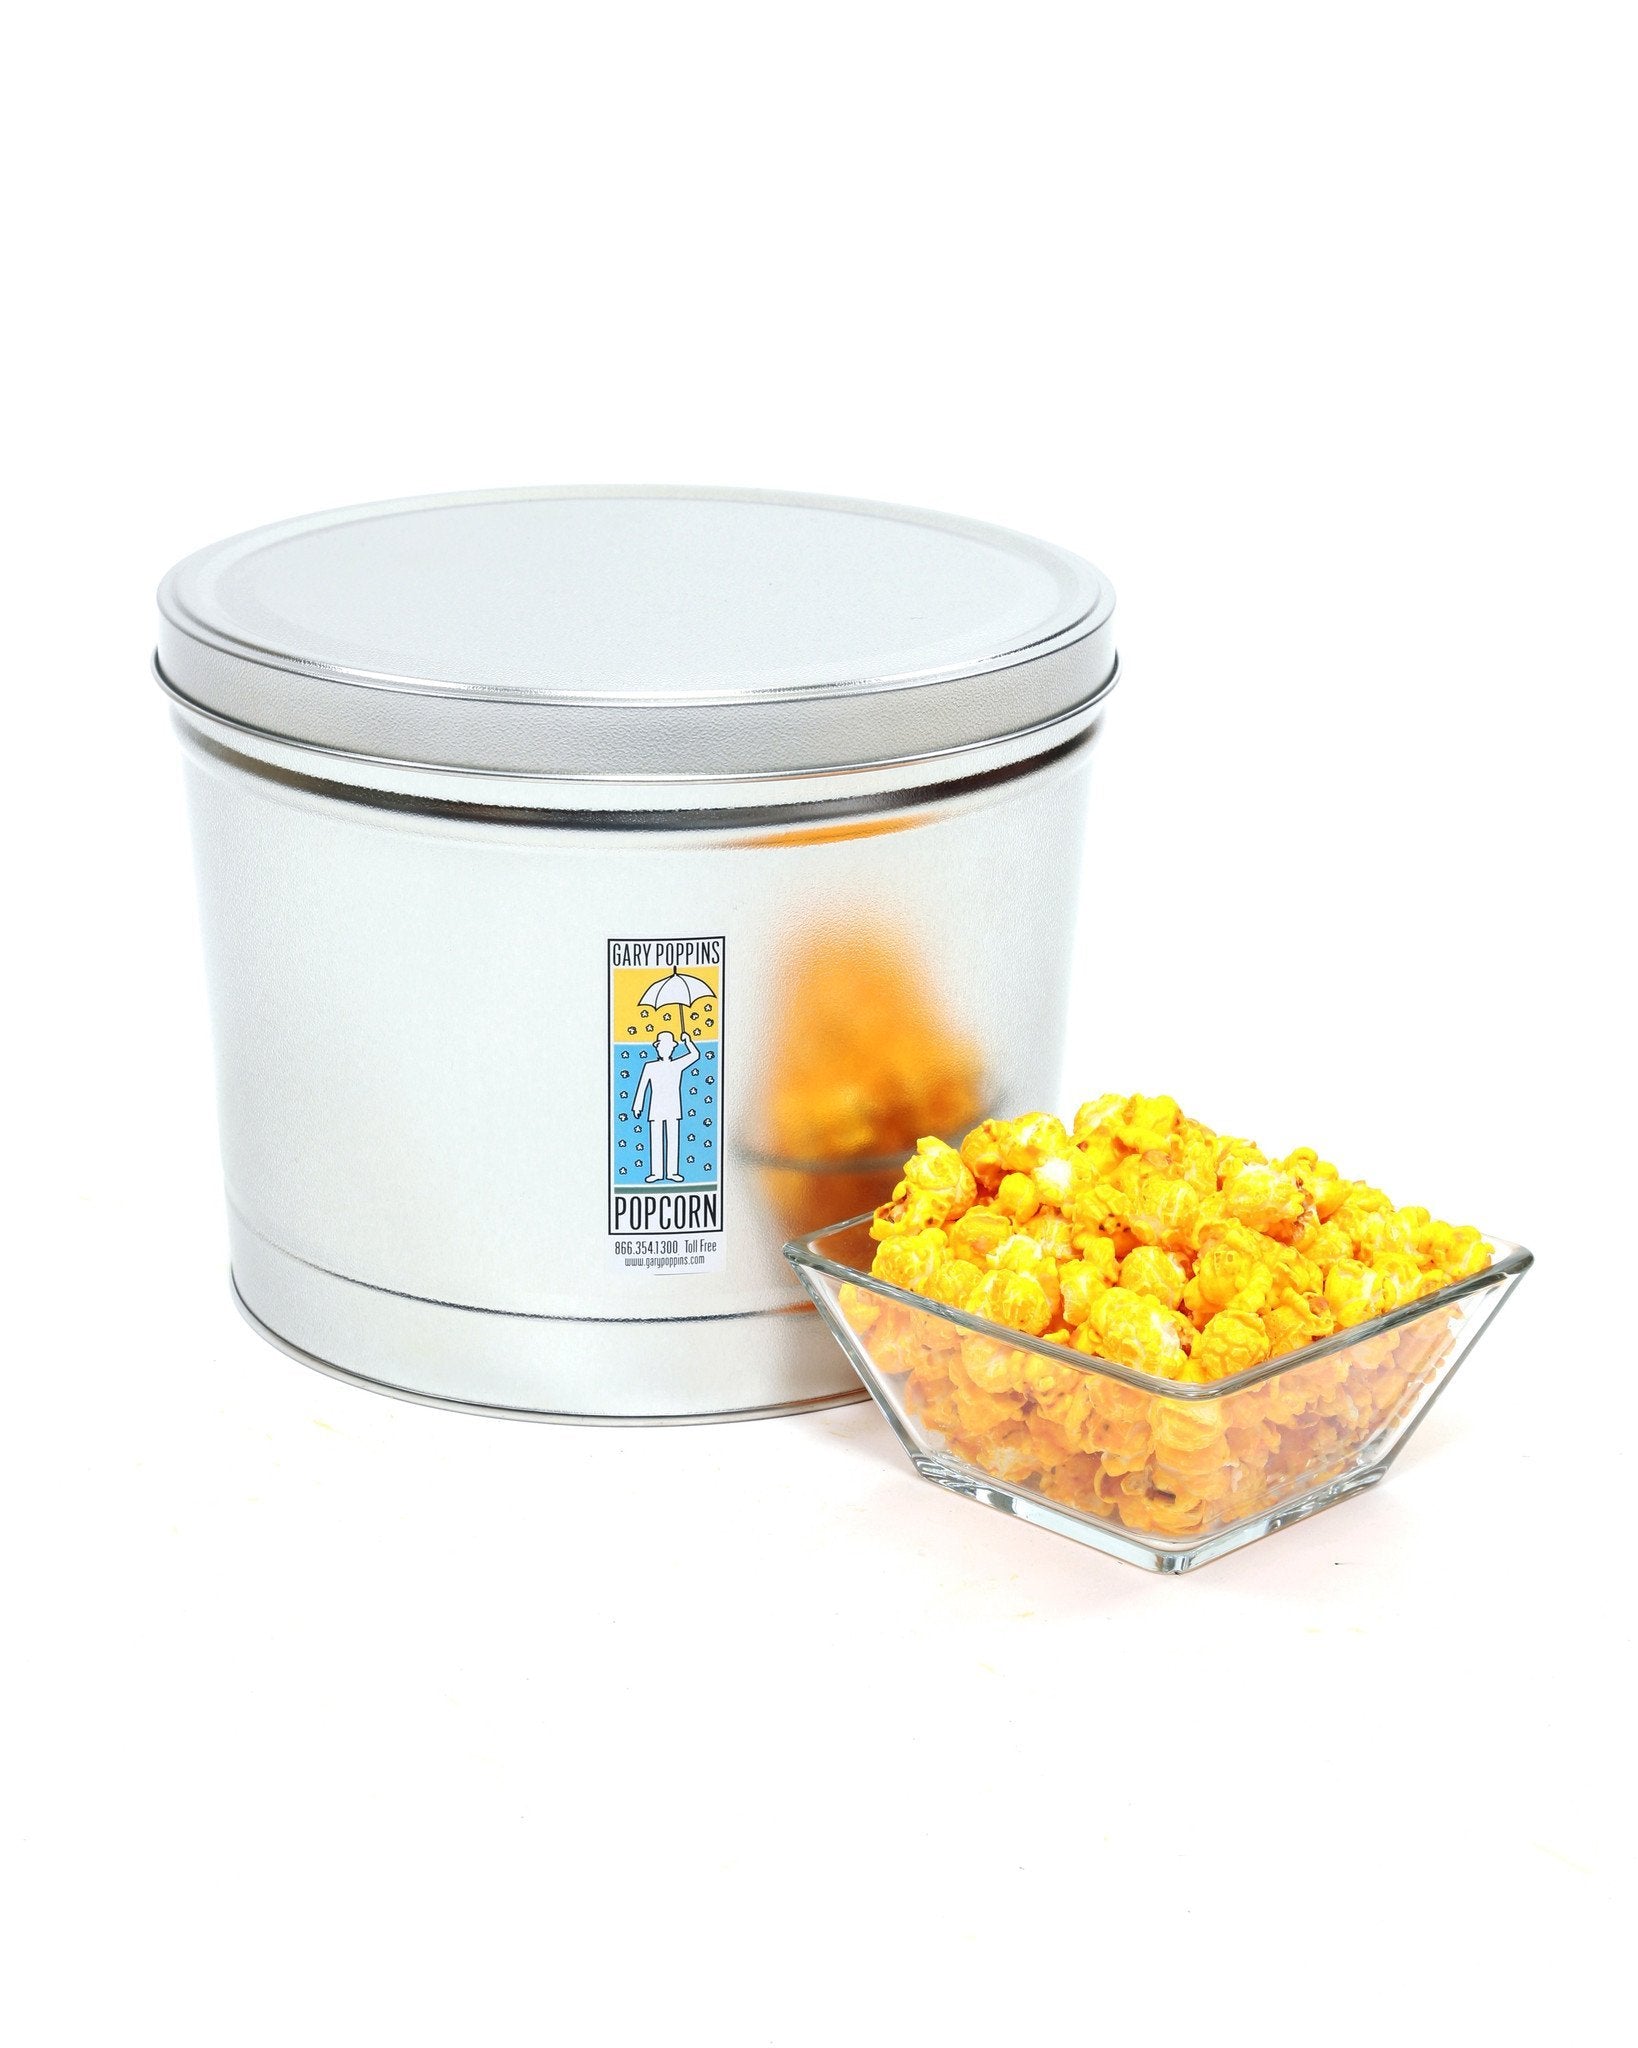 Classic Cheddar - Gourmet Popcorn - 2 Gallon Tin